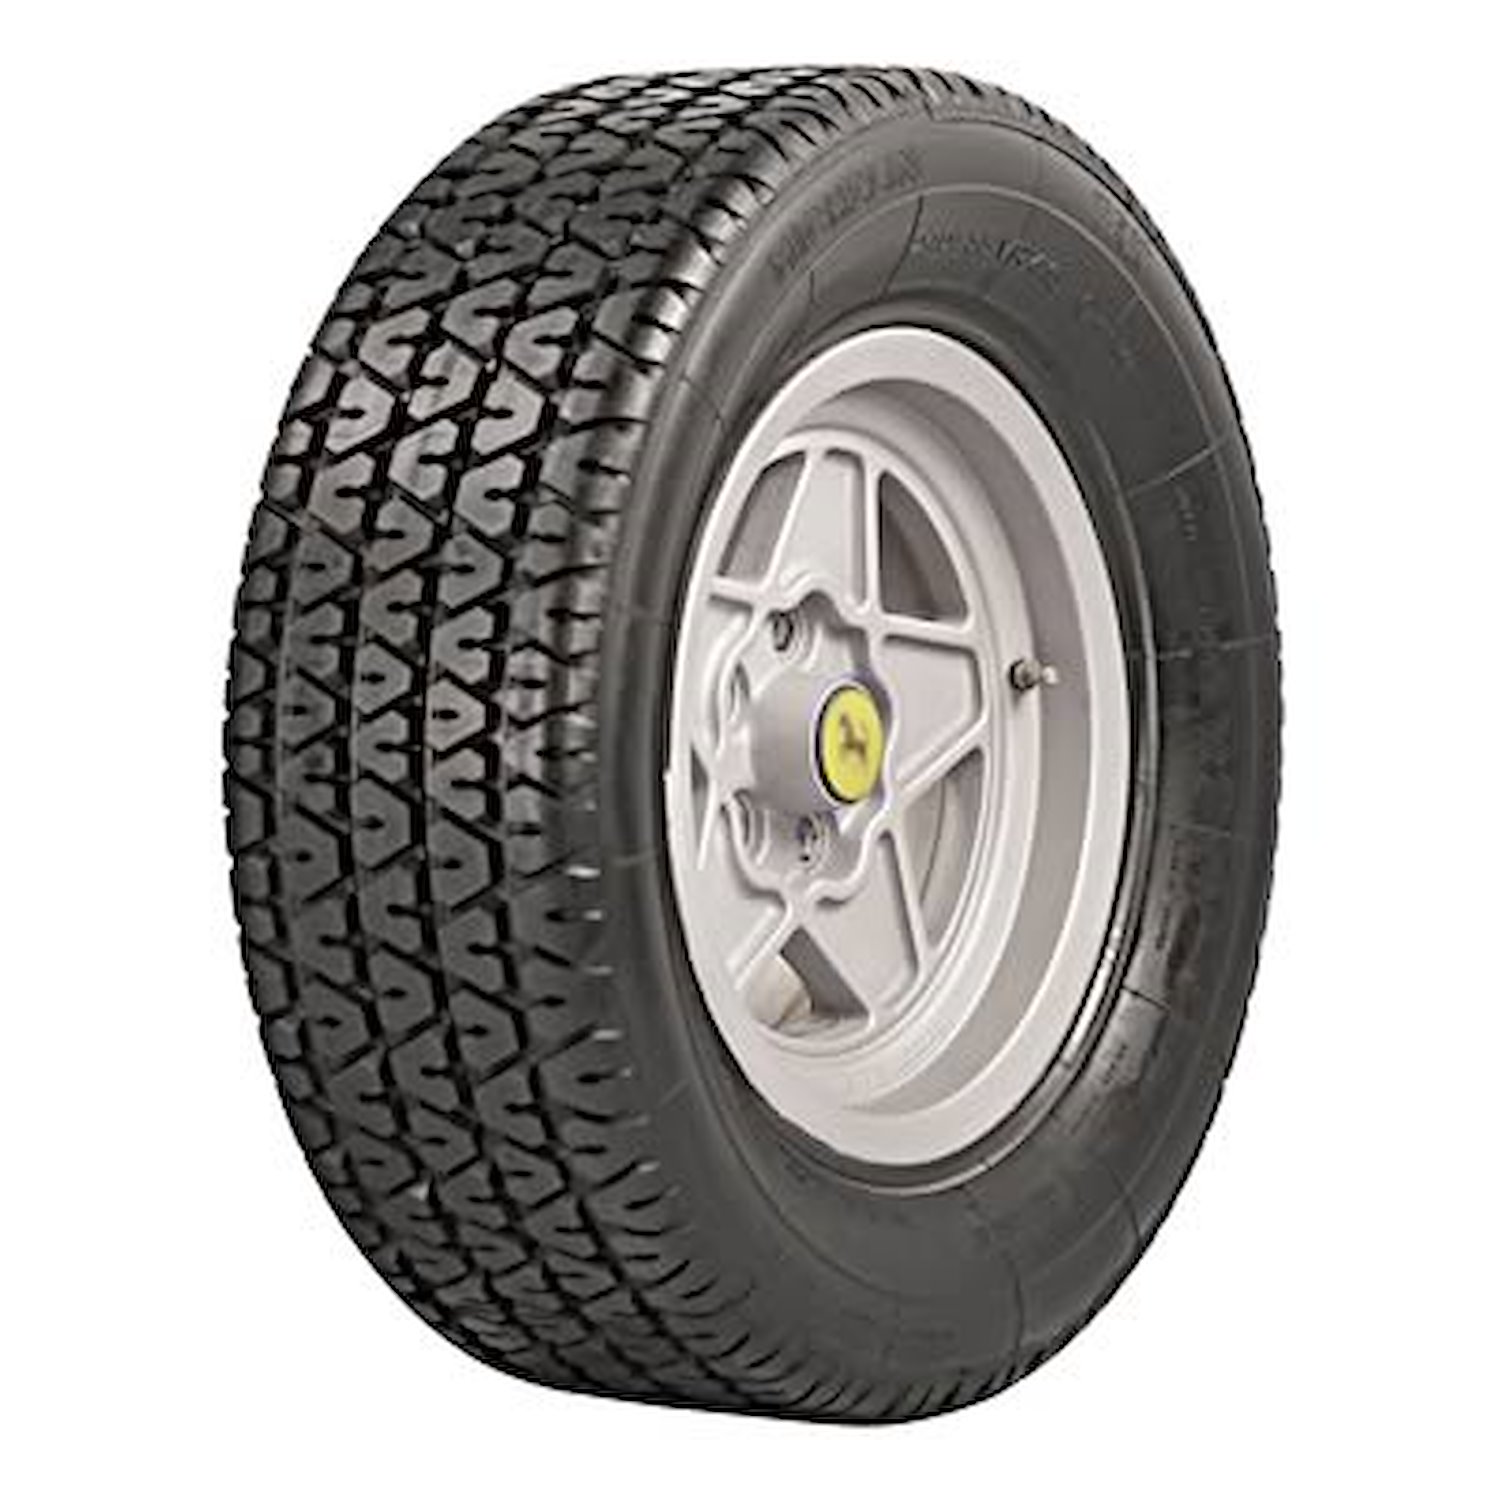 555793 Tire, Michelin TRX, 220/55VR365 92V